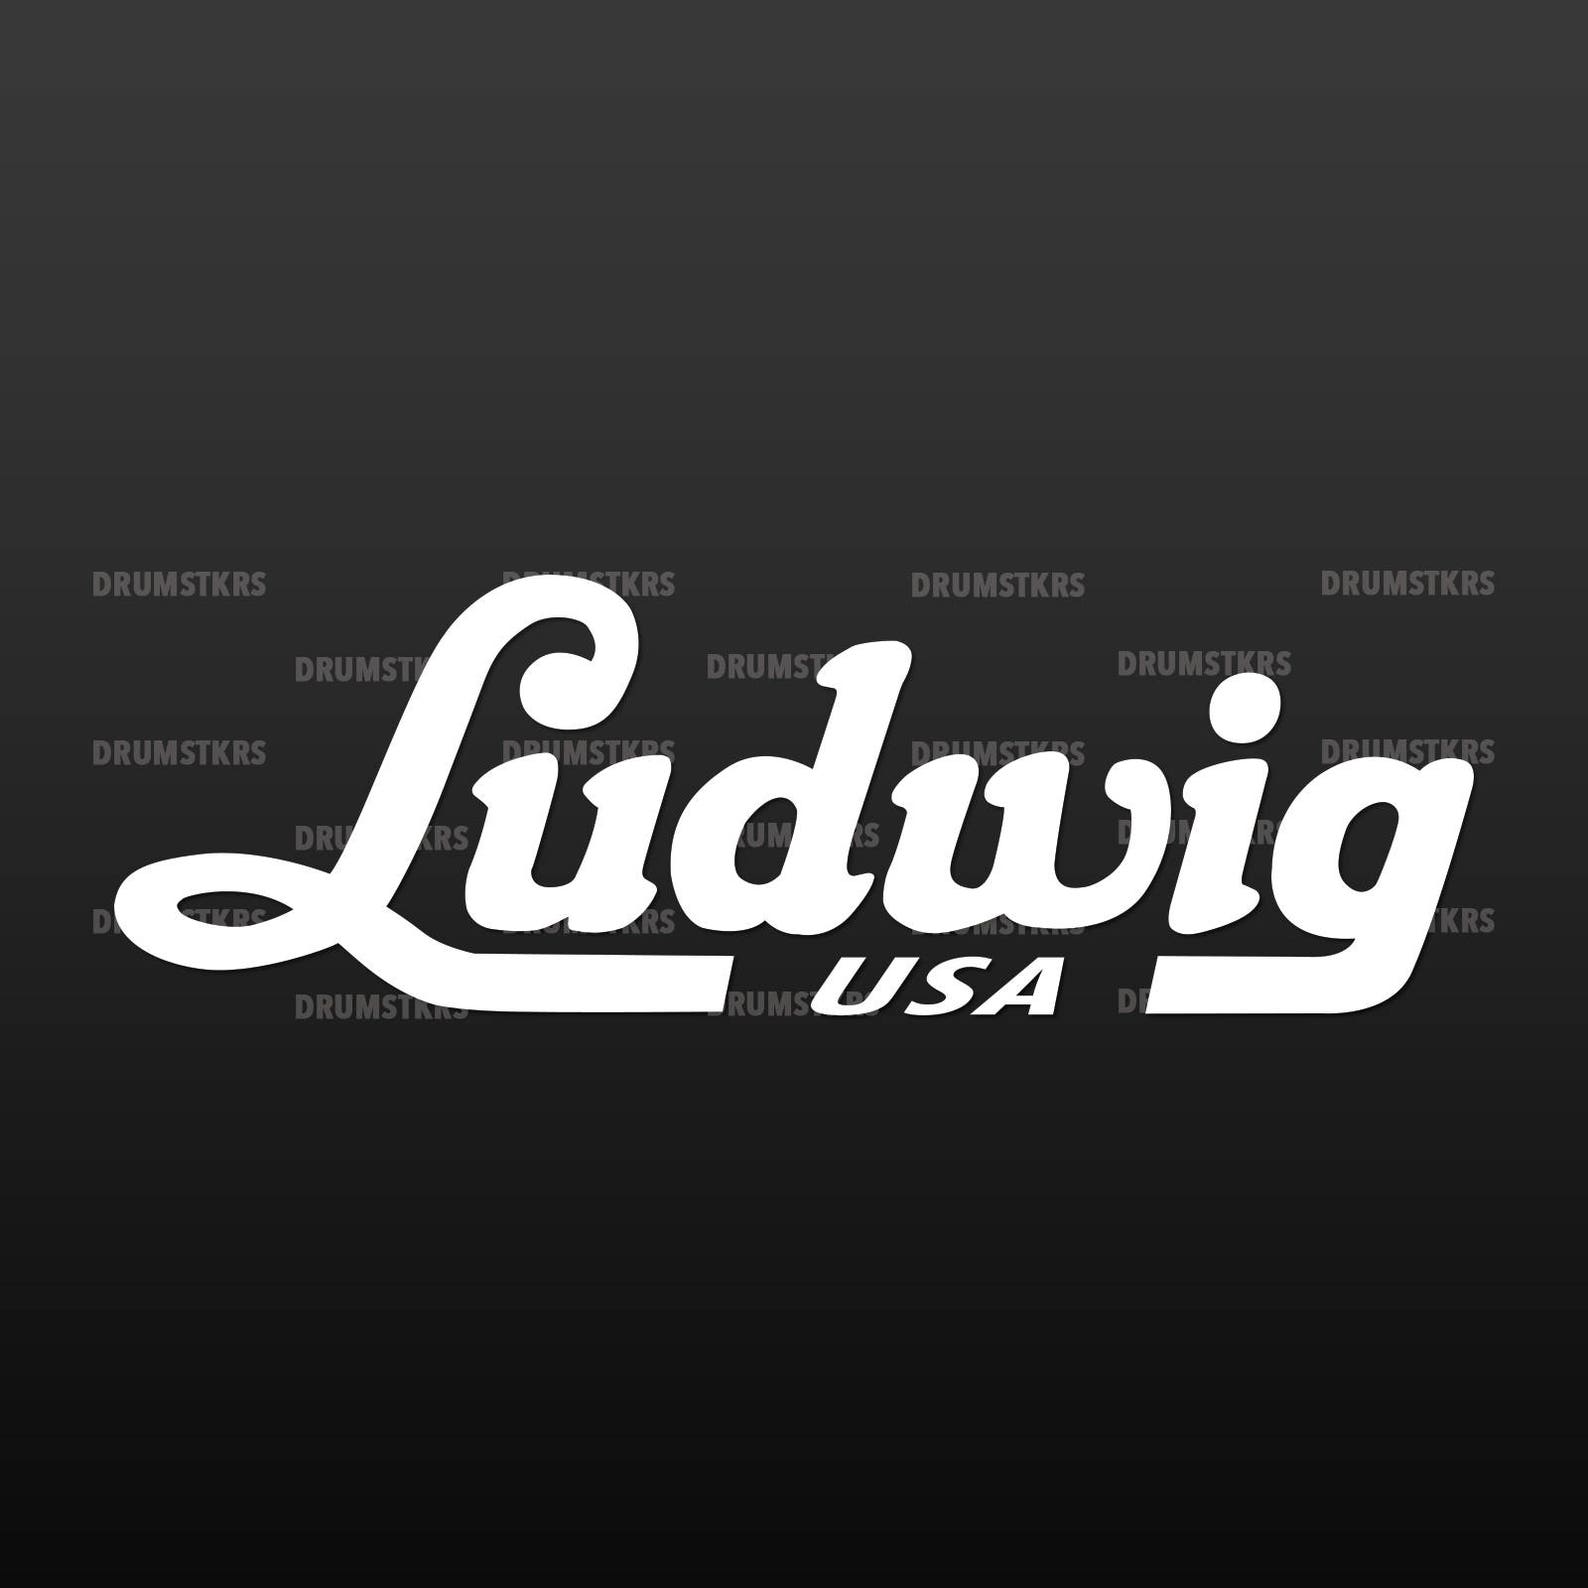 Scripts us. Ludwig Drums logo. DNB логотип. Ludwig logo Size.